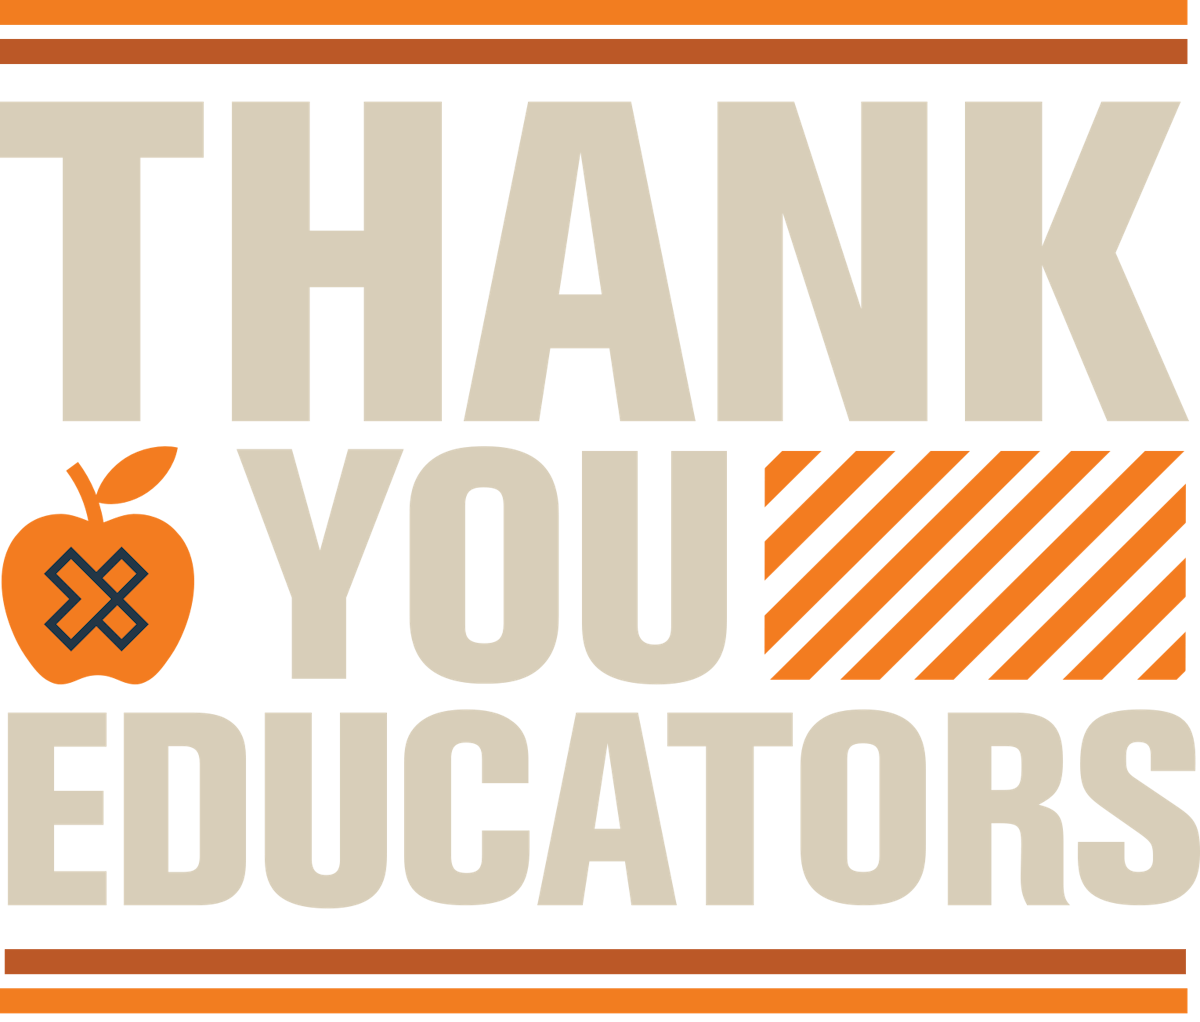 image of thank you educators typographic logo